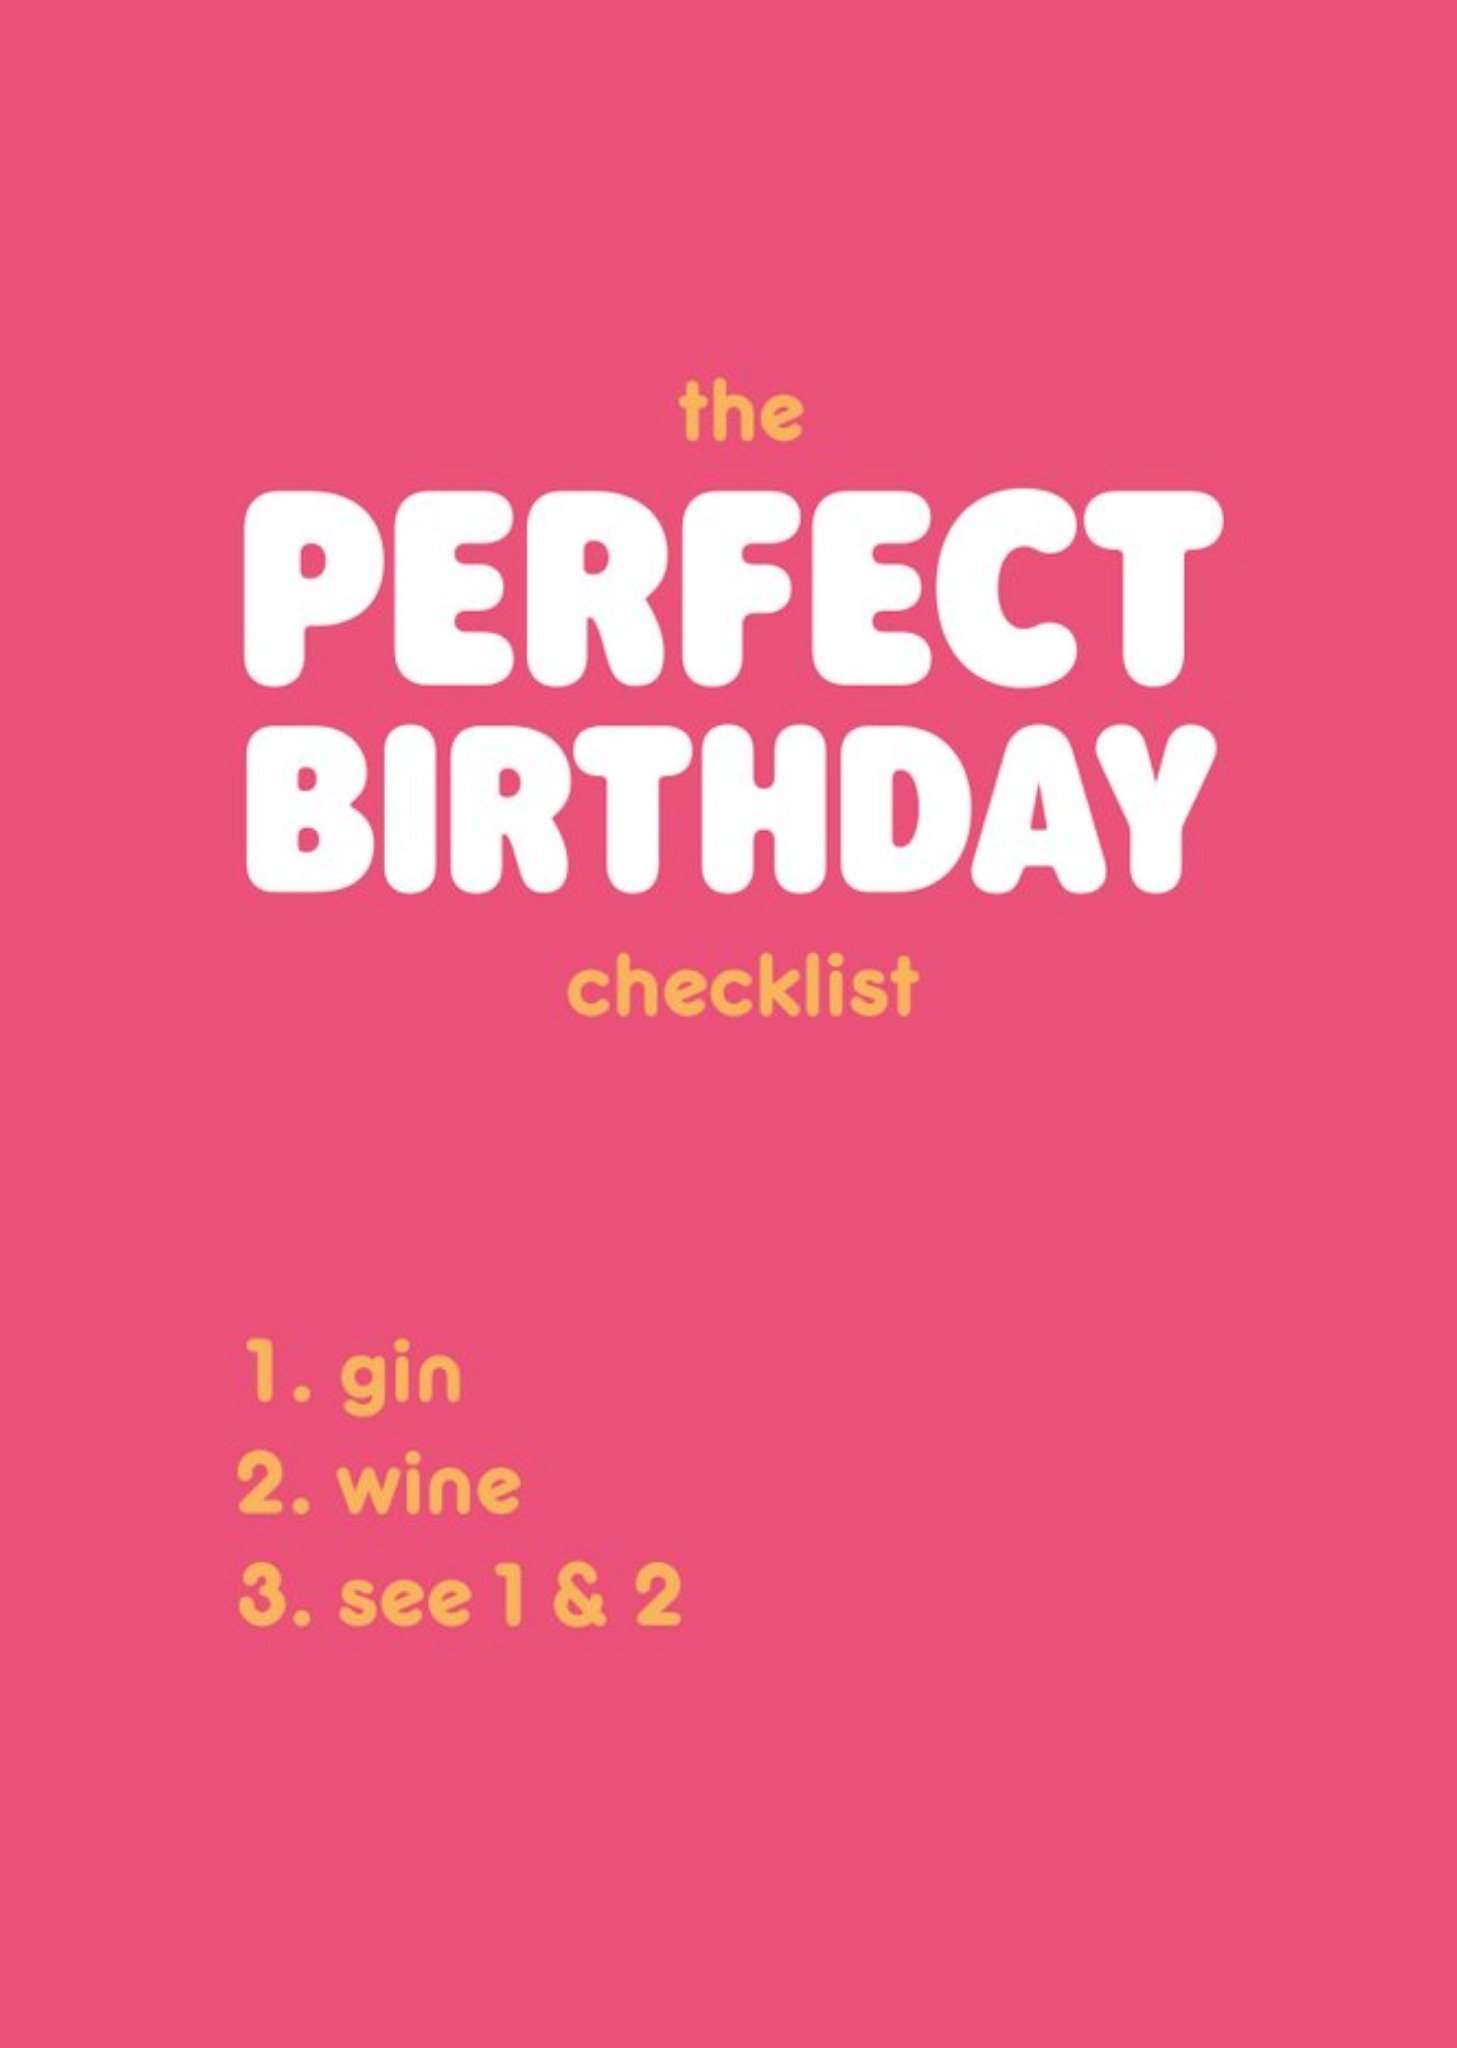 Moonpig The Perfect Birthday Checklist Funny Graphic Typographic Birthday Postcard